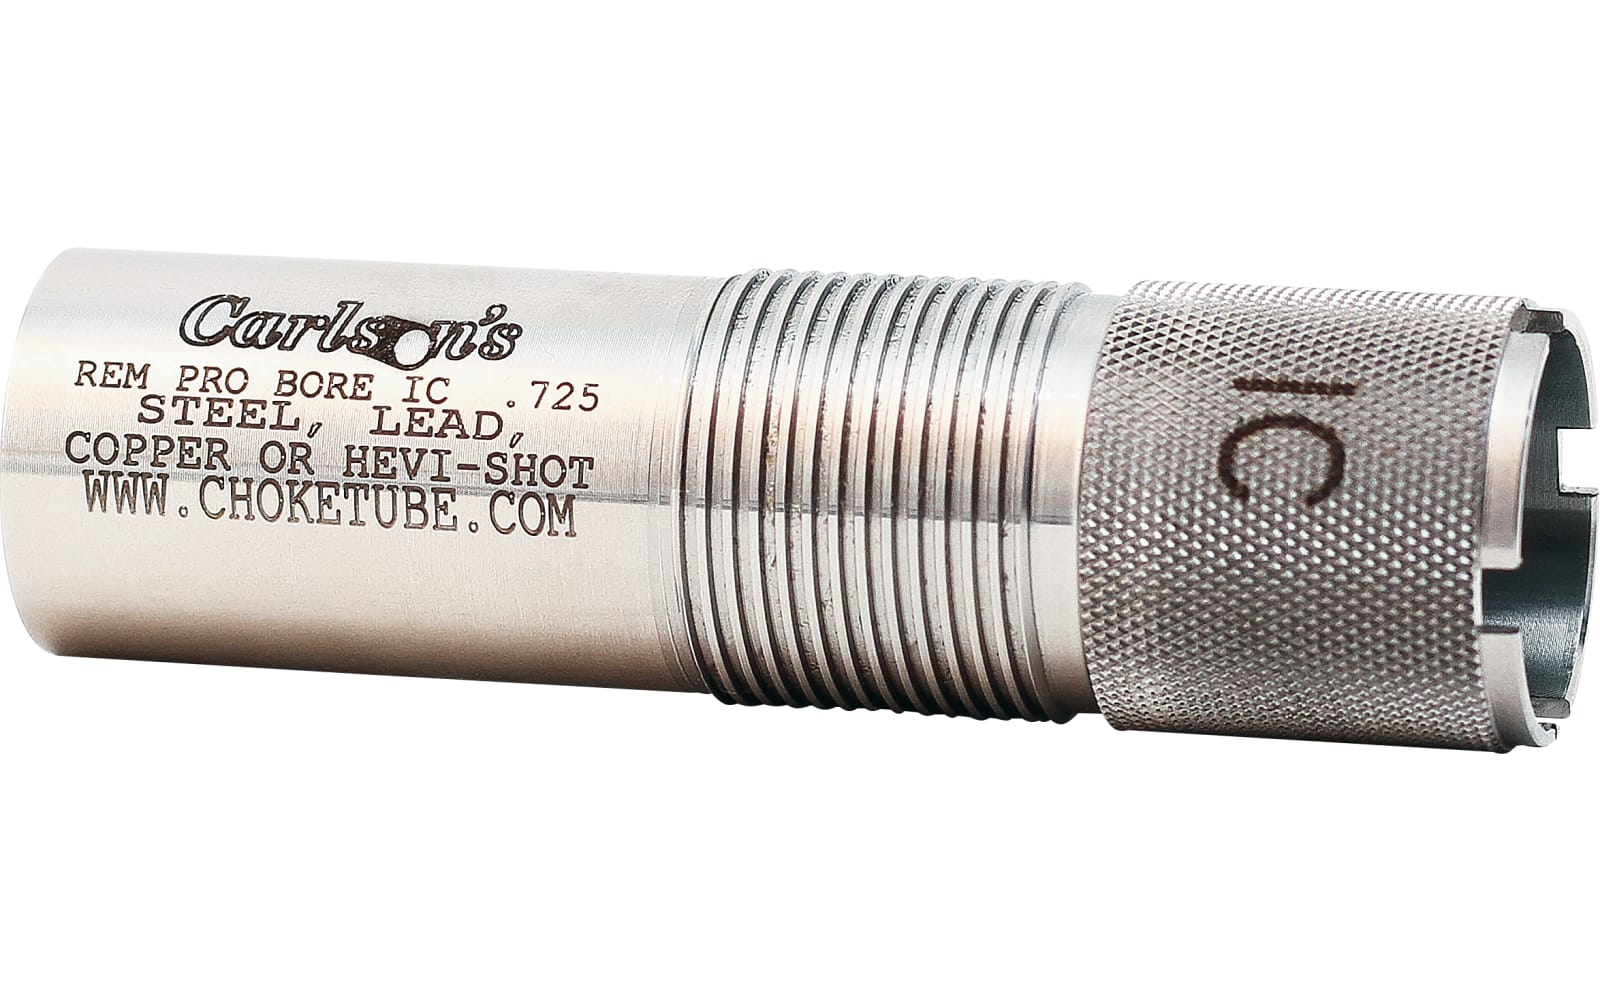 Black Long Range Carlsons Choke Tube Remington Pro Bore 12 Gauge Cremator Non-Ported Waterfowl Choke Tubes 